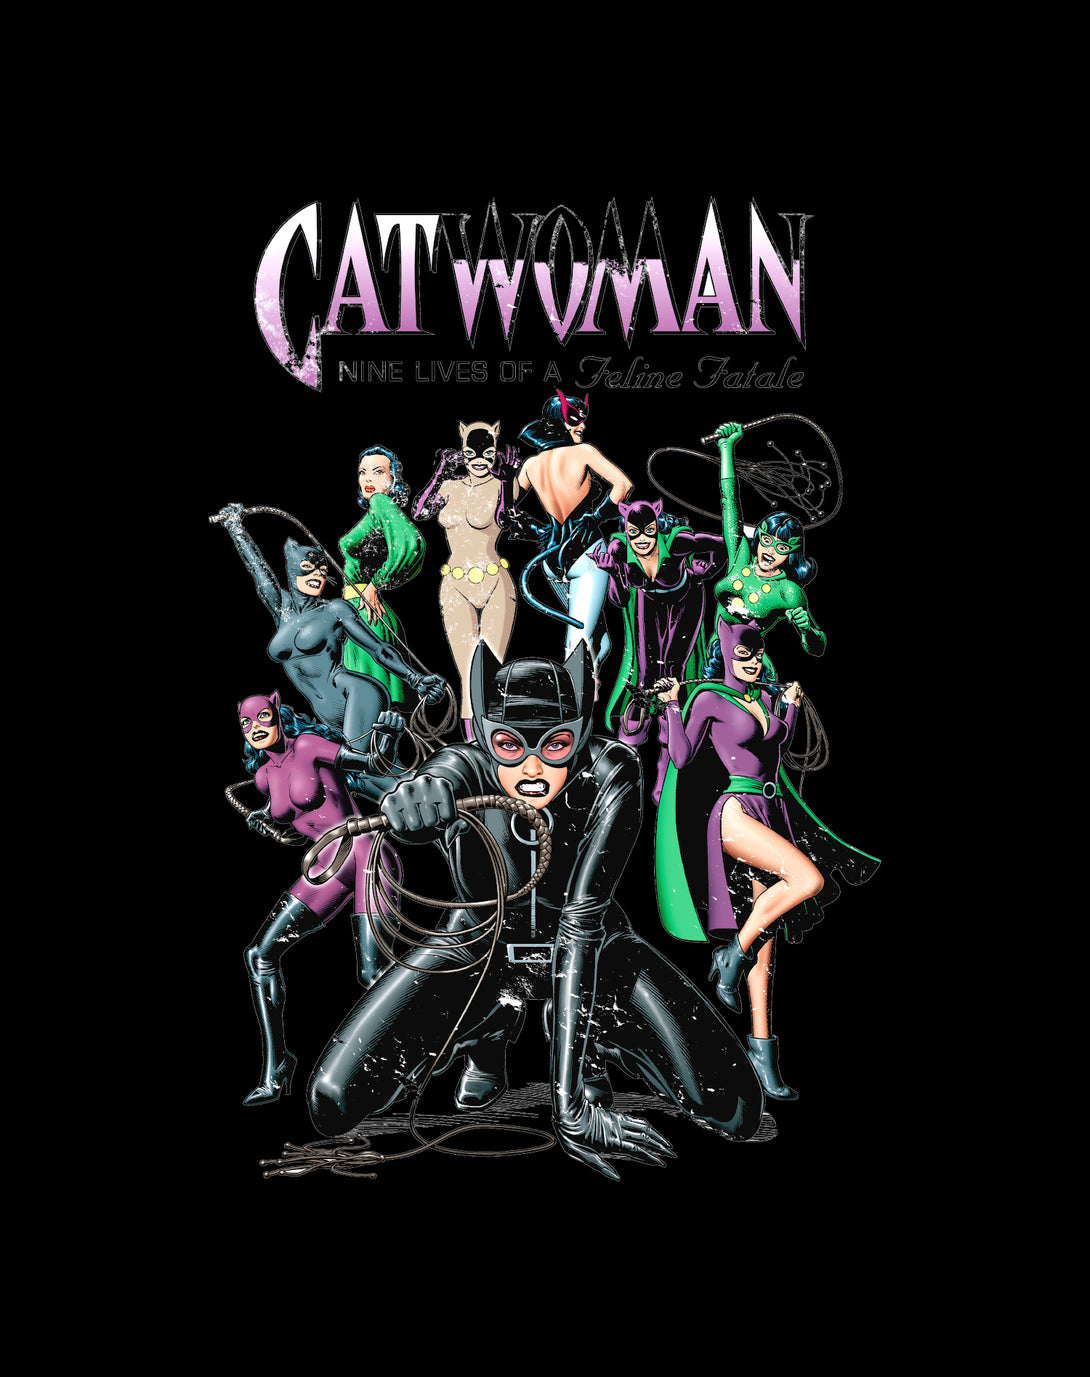 DC Comics Catwoman Cover CW55 Official Men's T-Shirt Black - Urban Species Design Close Up